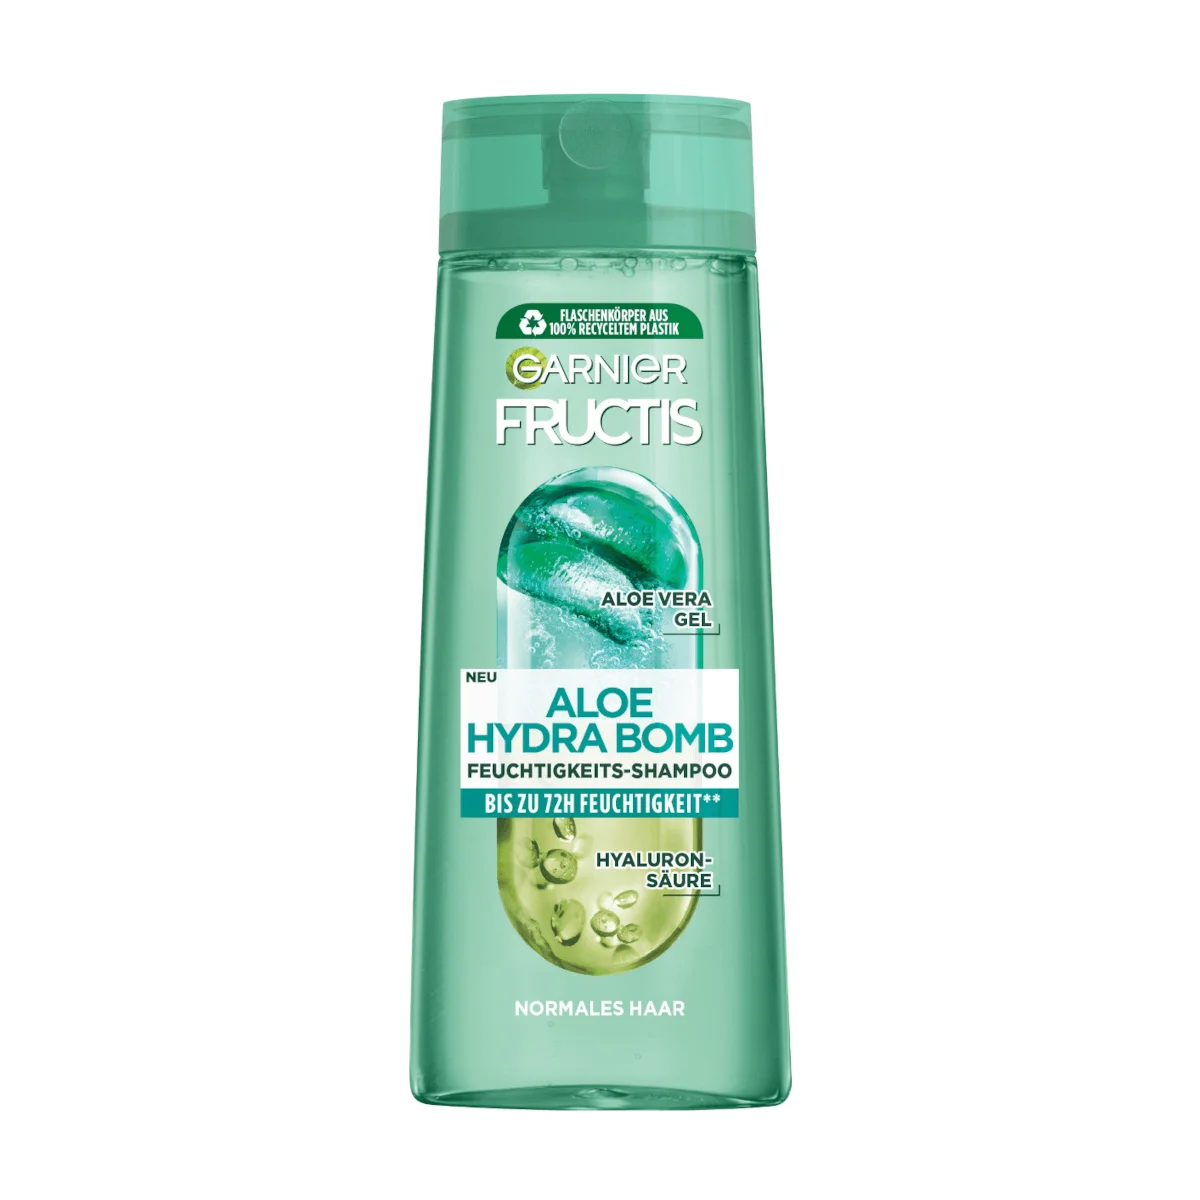 Garnier Fructis Feuchtigkeits-Shampoo Aloe Hydra Bomb, 250 ml